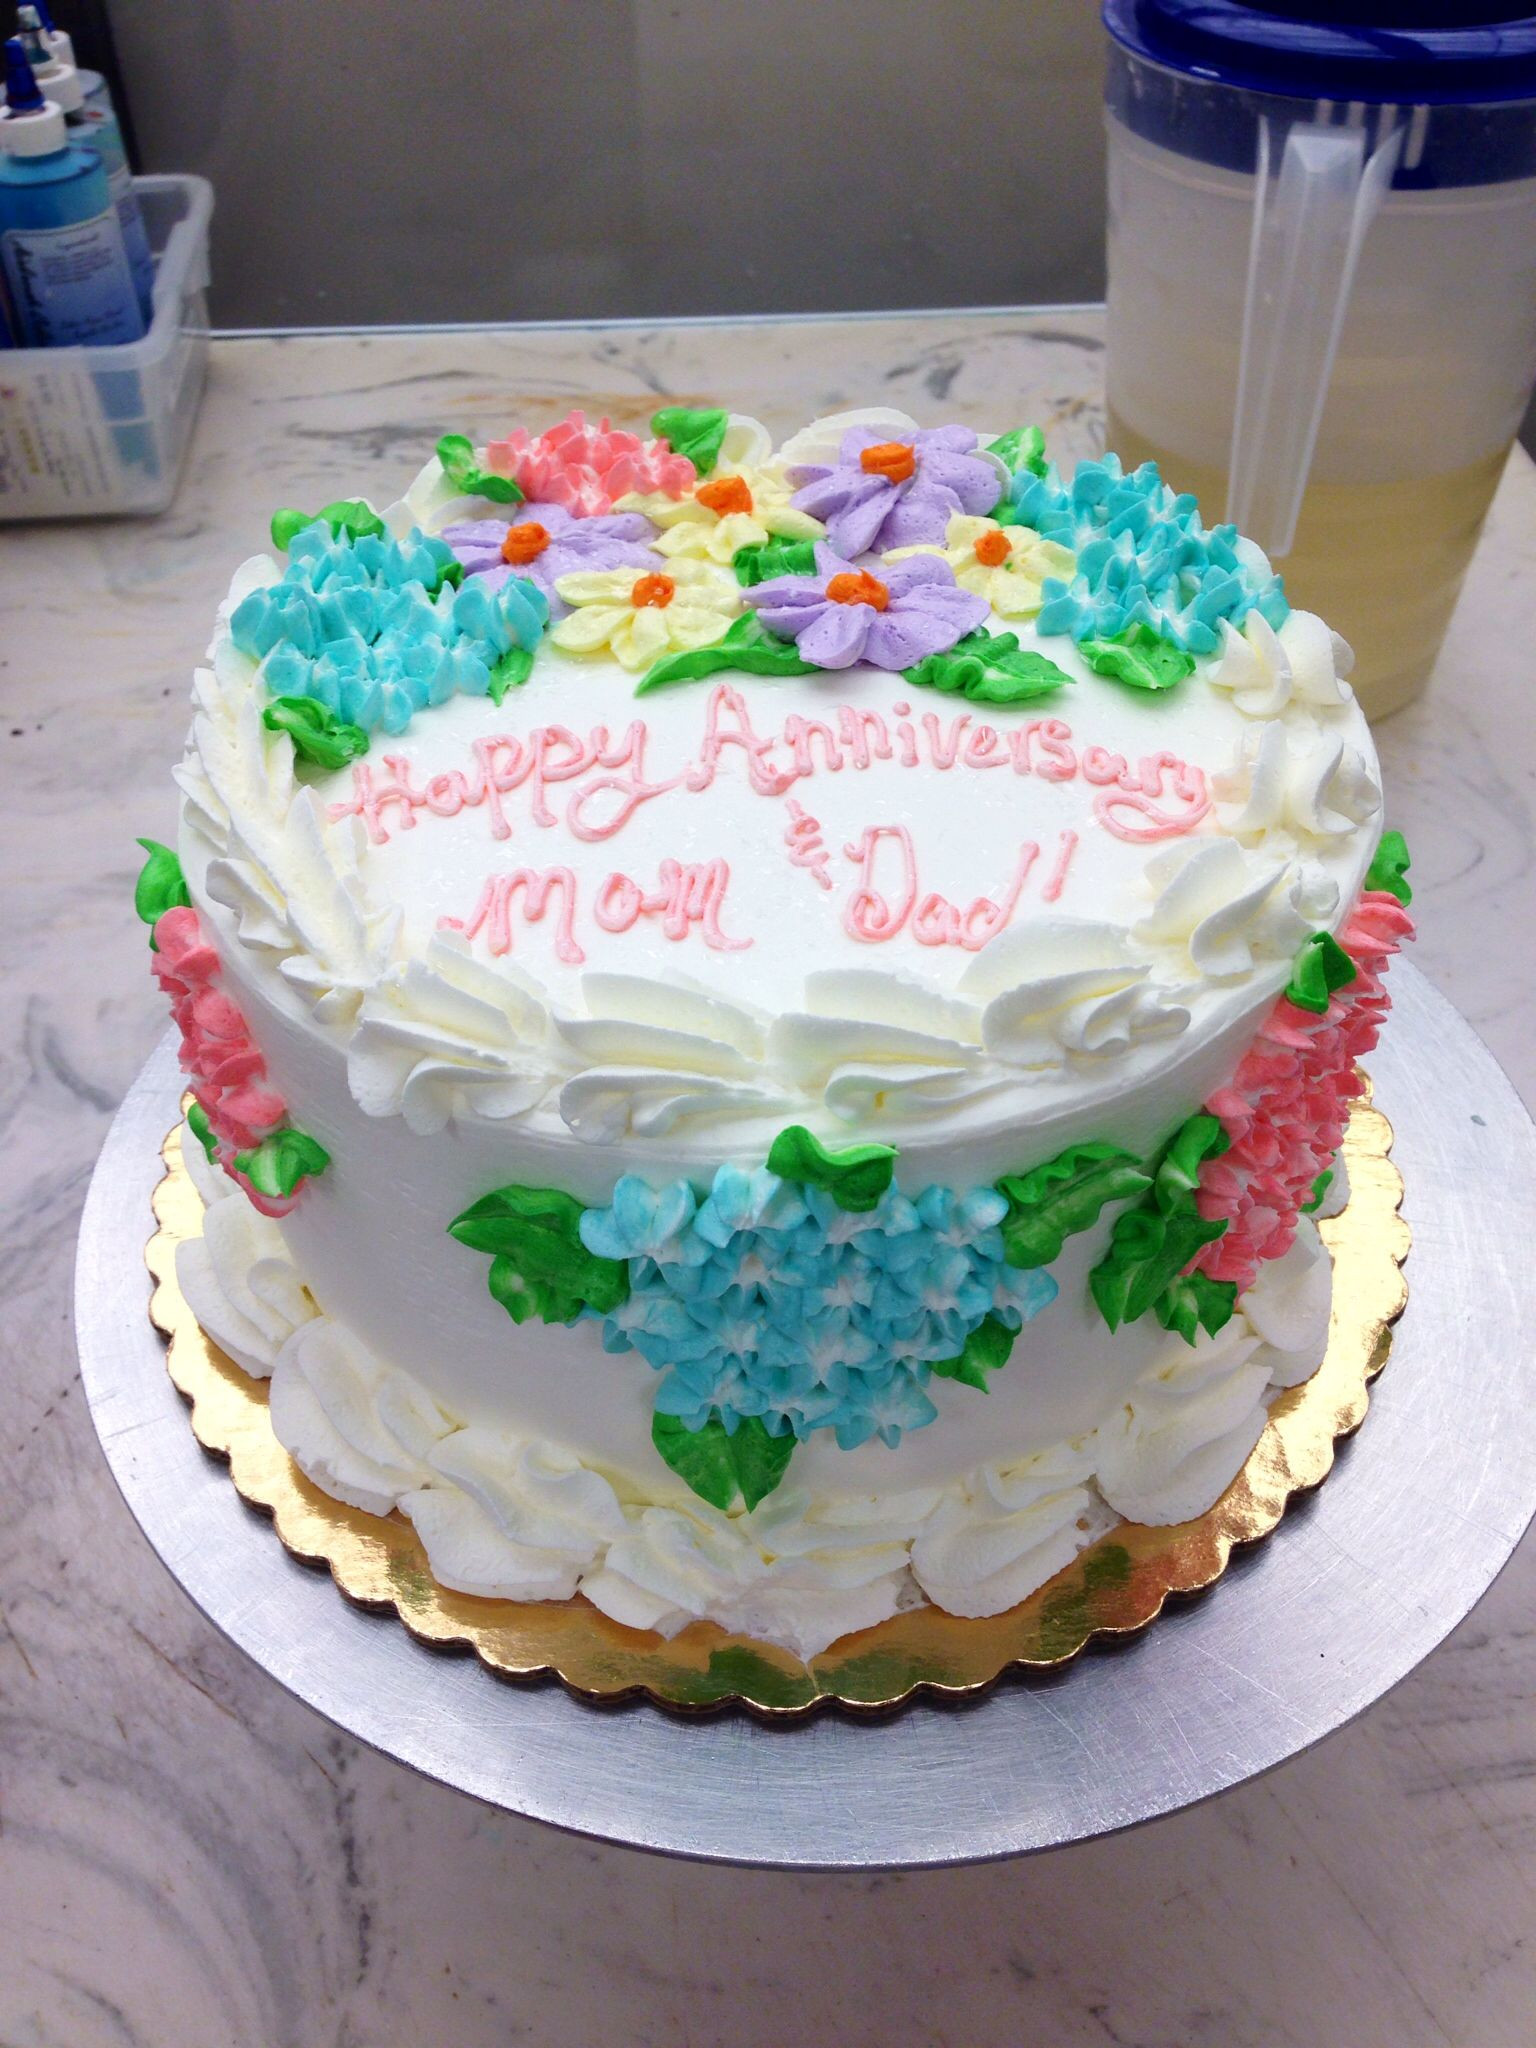 Publix Birthday Cake Designs
 Publix cake with hydrangeas Sweets Pinterest